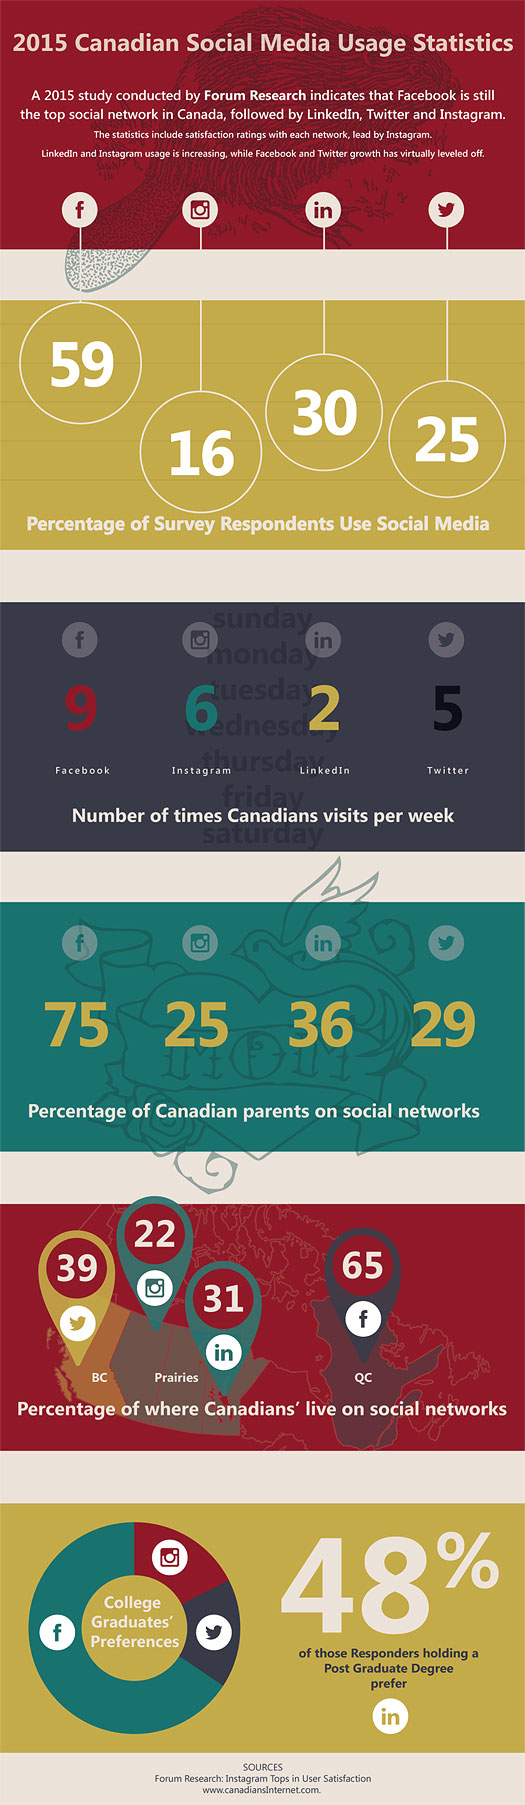 Canadian Social Media Usage Statistics Infographic